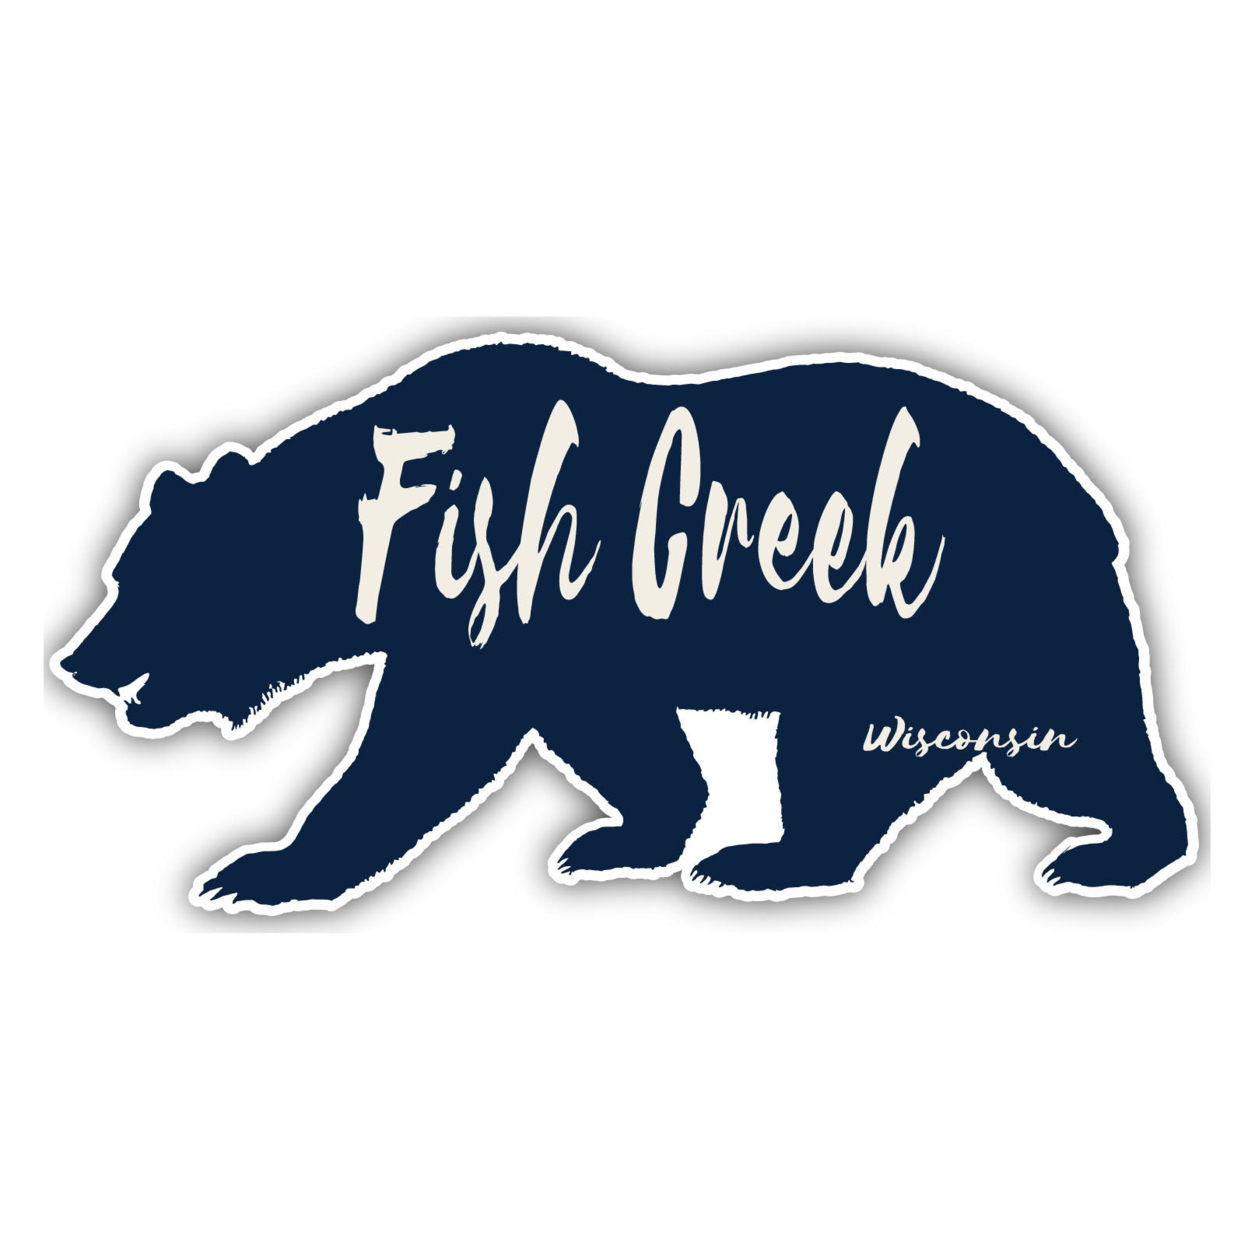 Fish Creek Wisconsin Souvenir Decorative Stickers (Choose Theme And Size) - Single Unit, 6-Inch, Bear